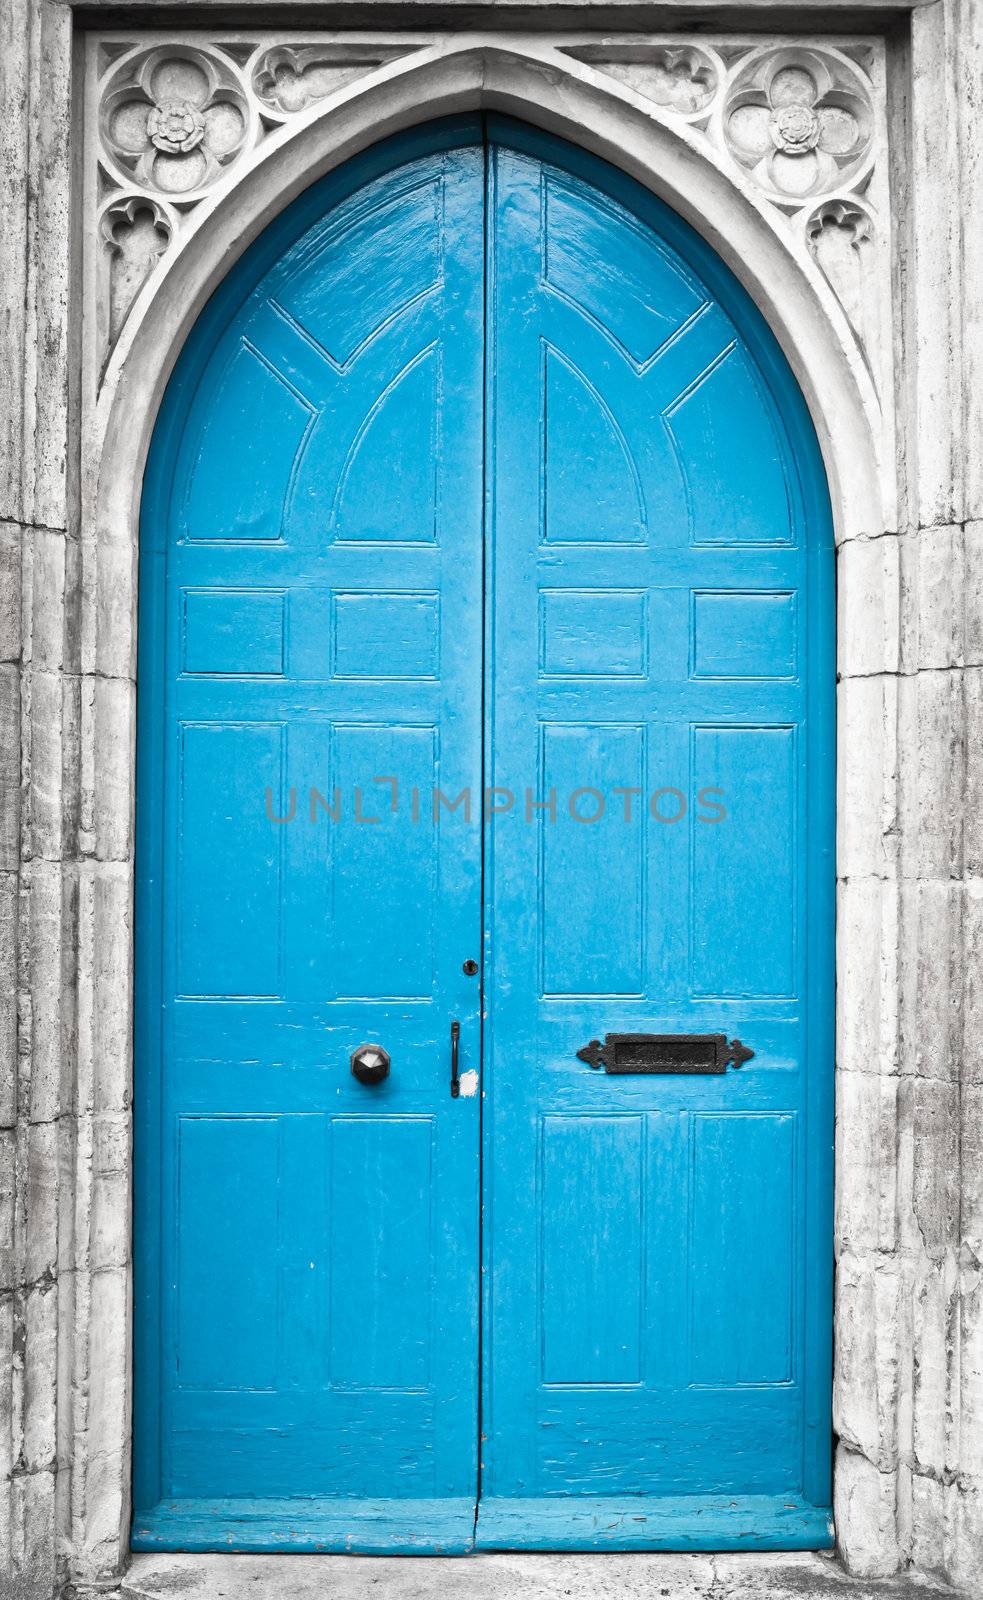 A tall blue church doorway in a gothic stone wall